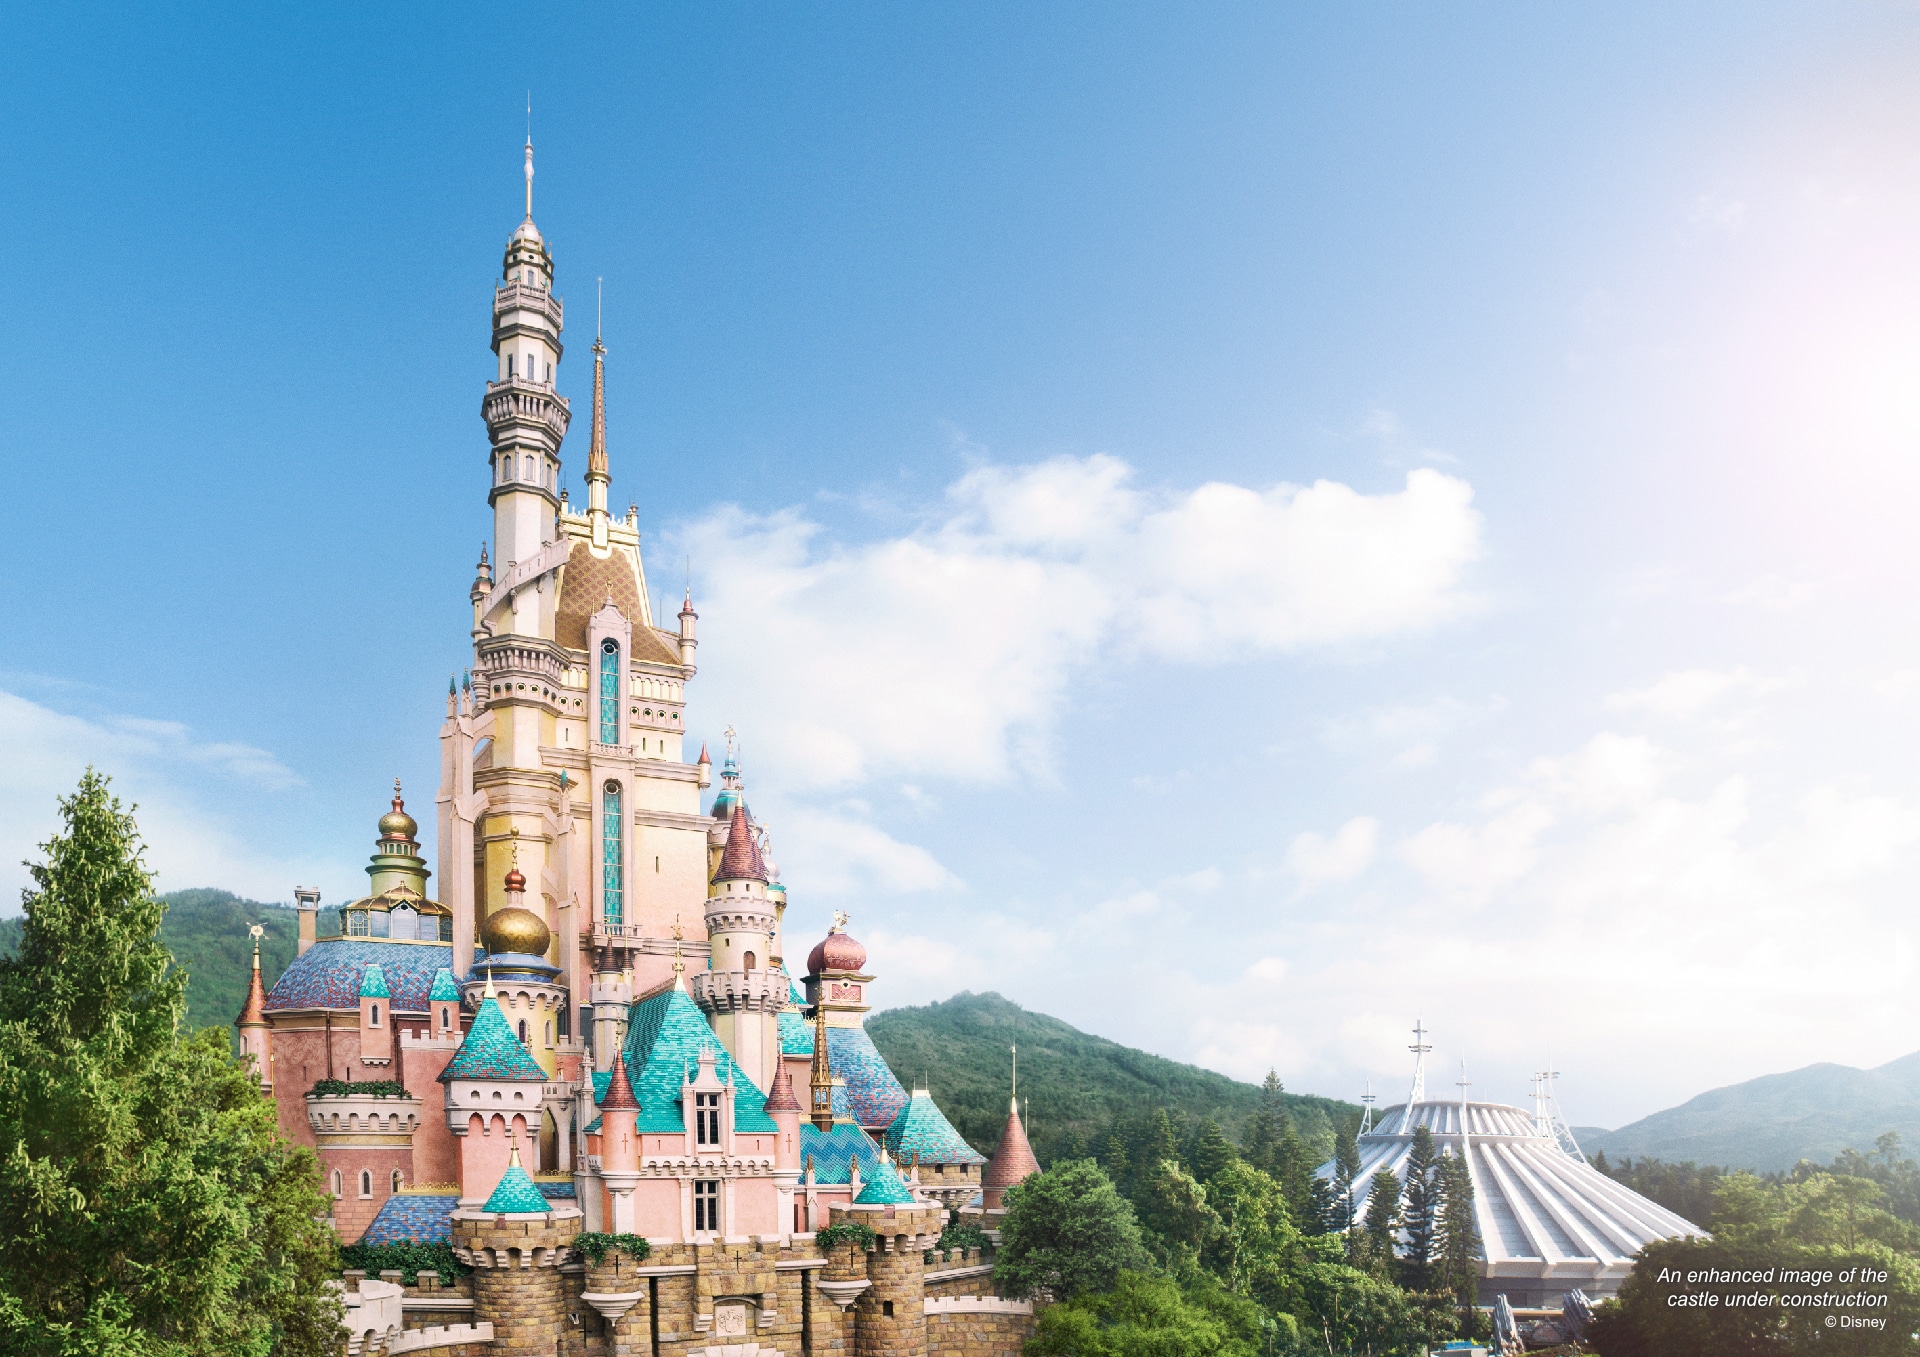 Hong Kong Disneyland - Castle of Magical Dream